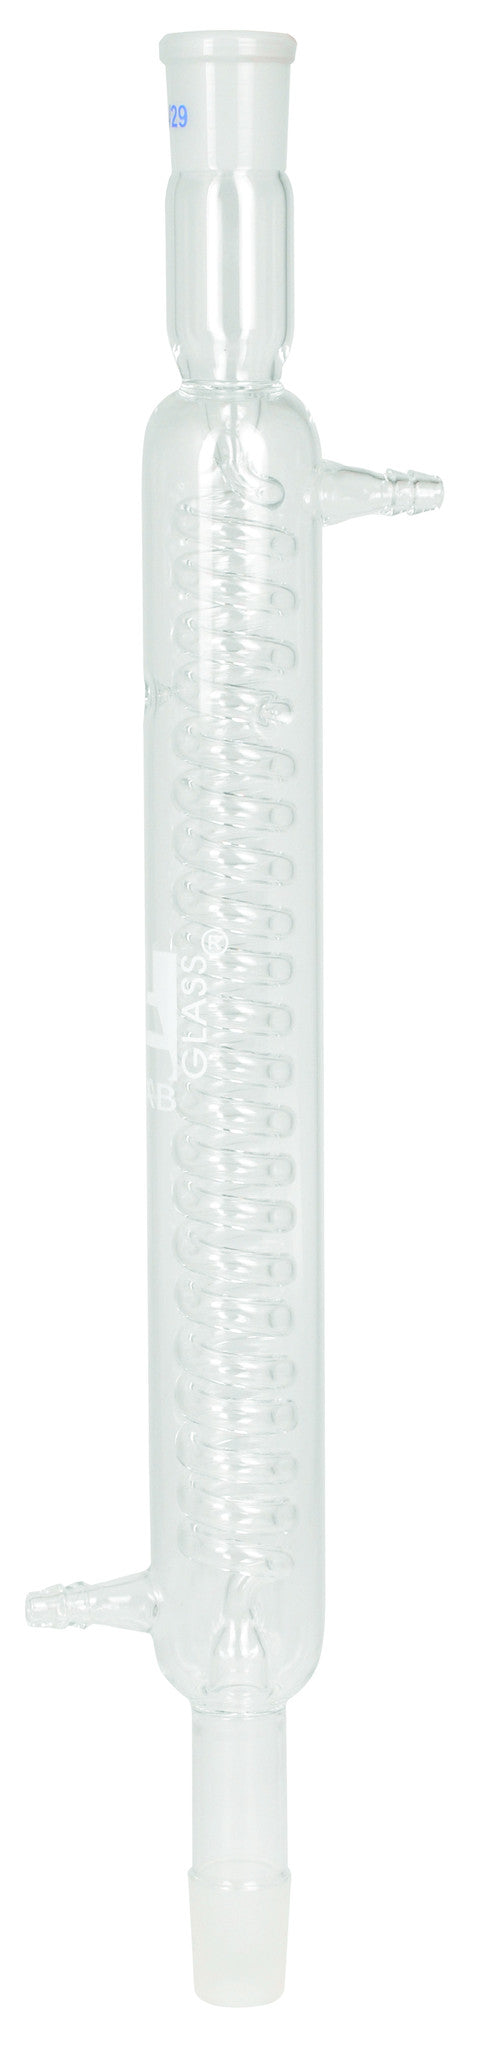 Condenser - Graham, Socket size 24/29 & Cone size 24/29, Effective length 30cm.